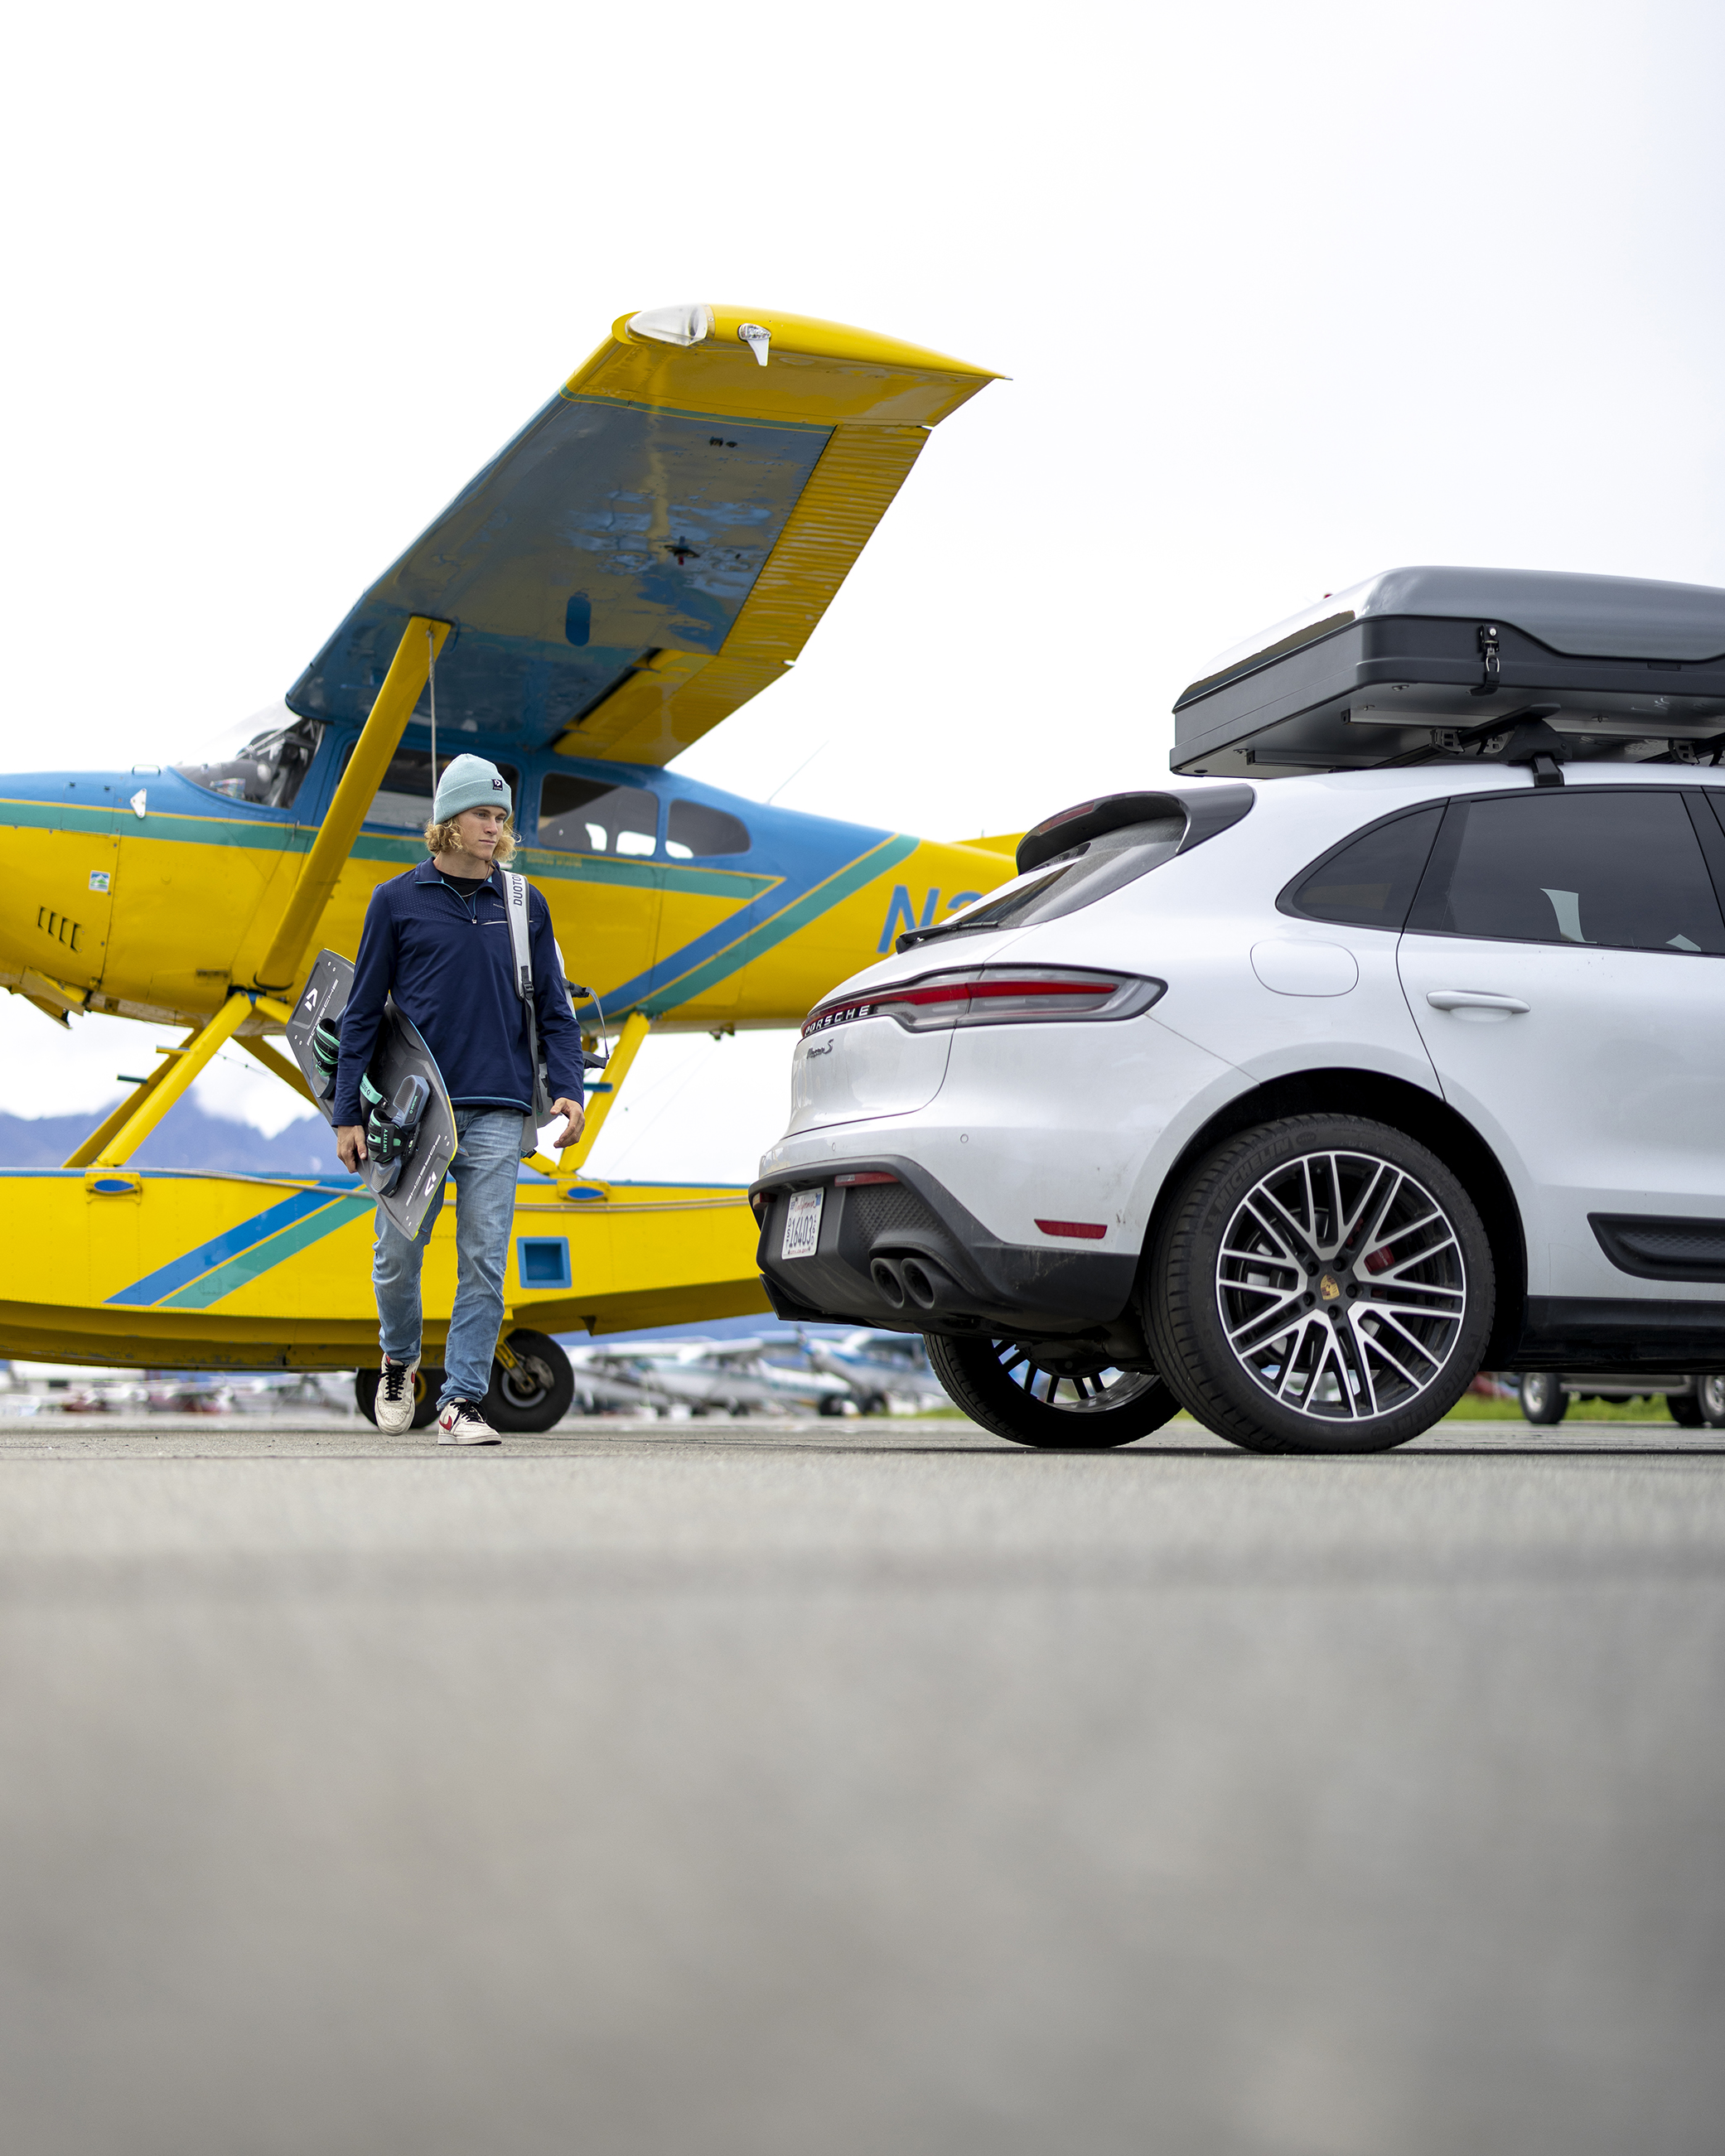 Kitesurfer Liam Whaley walking from yellow seaplane to Porsche Macan